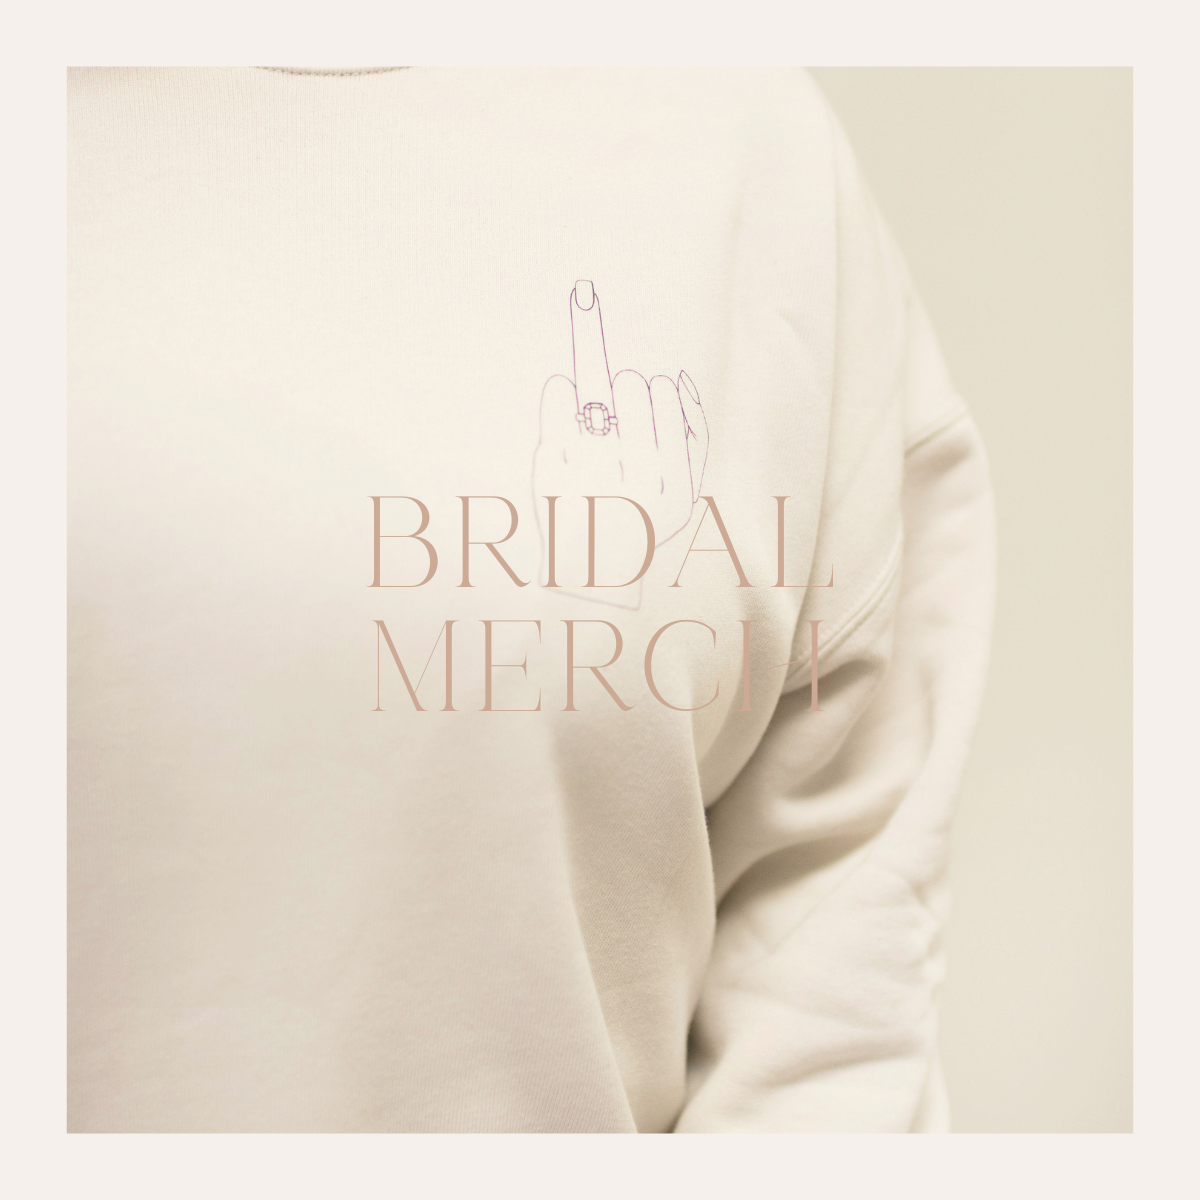 Bridal Merch